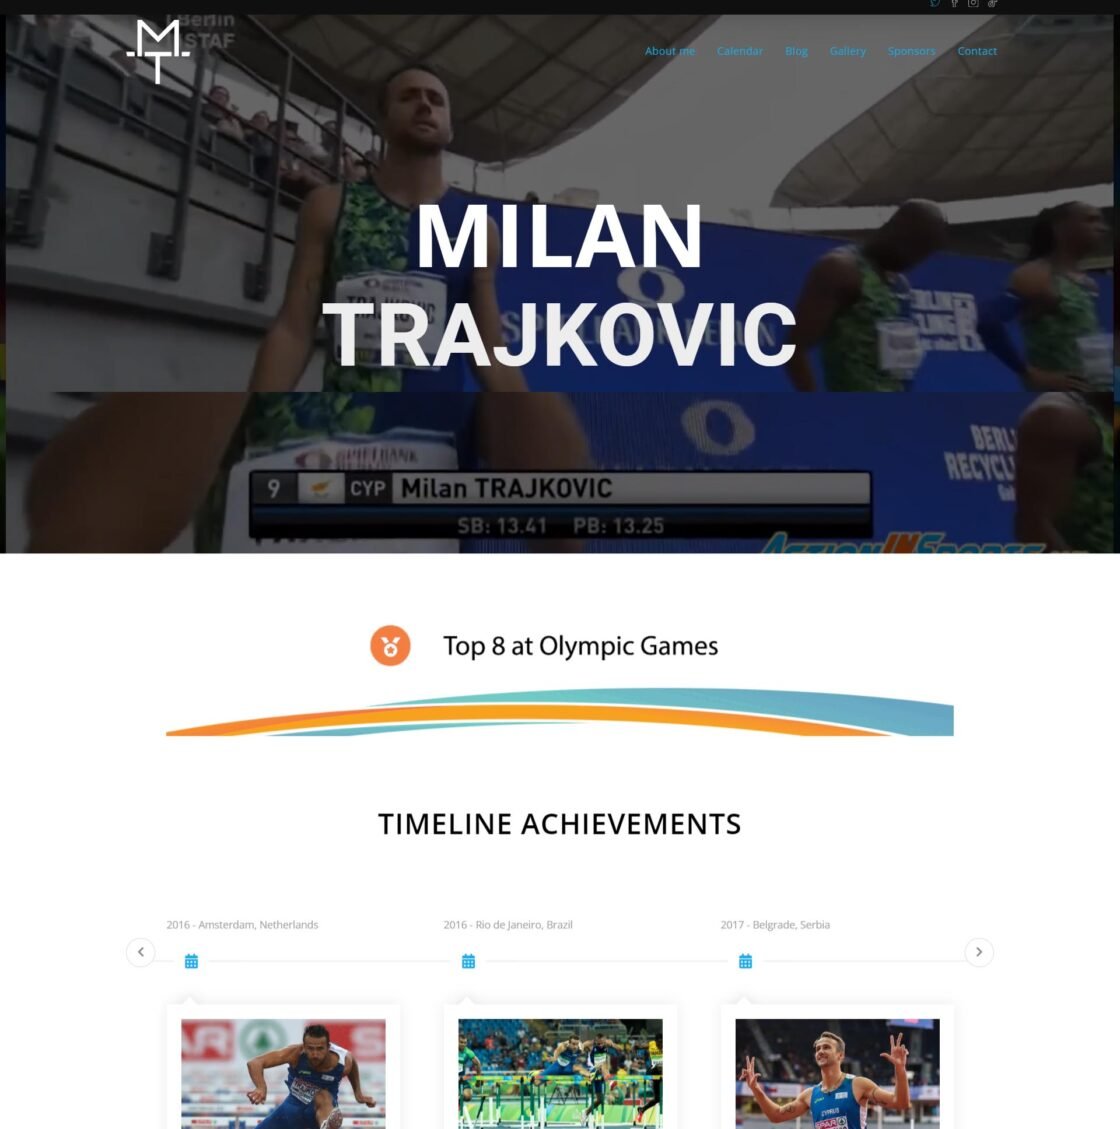 Milan Trajkovic